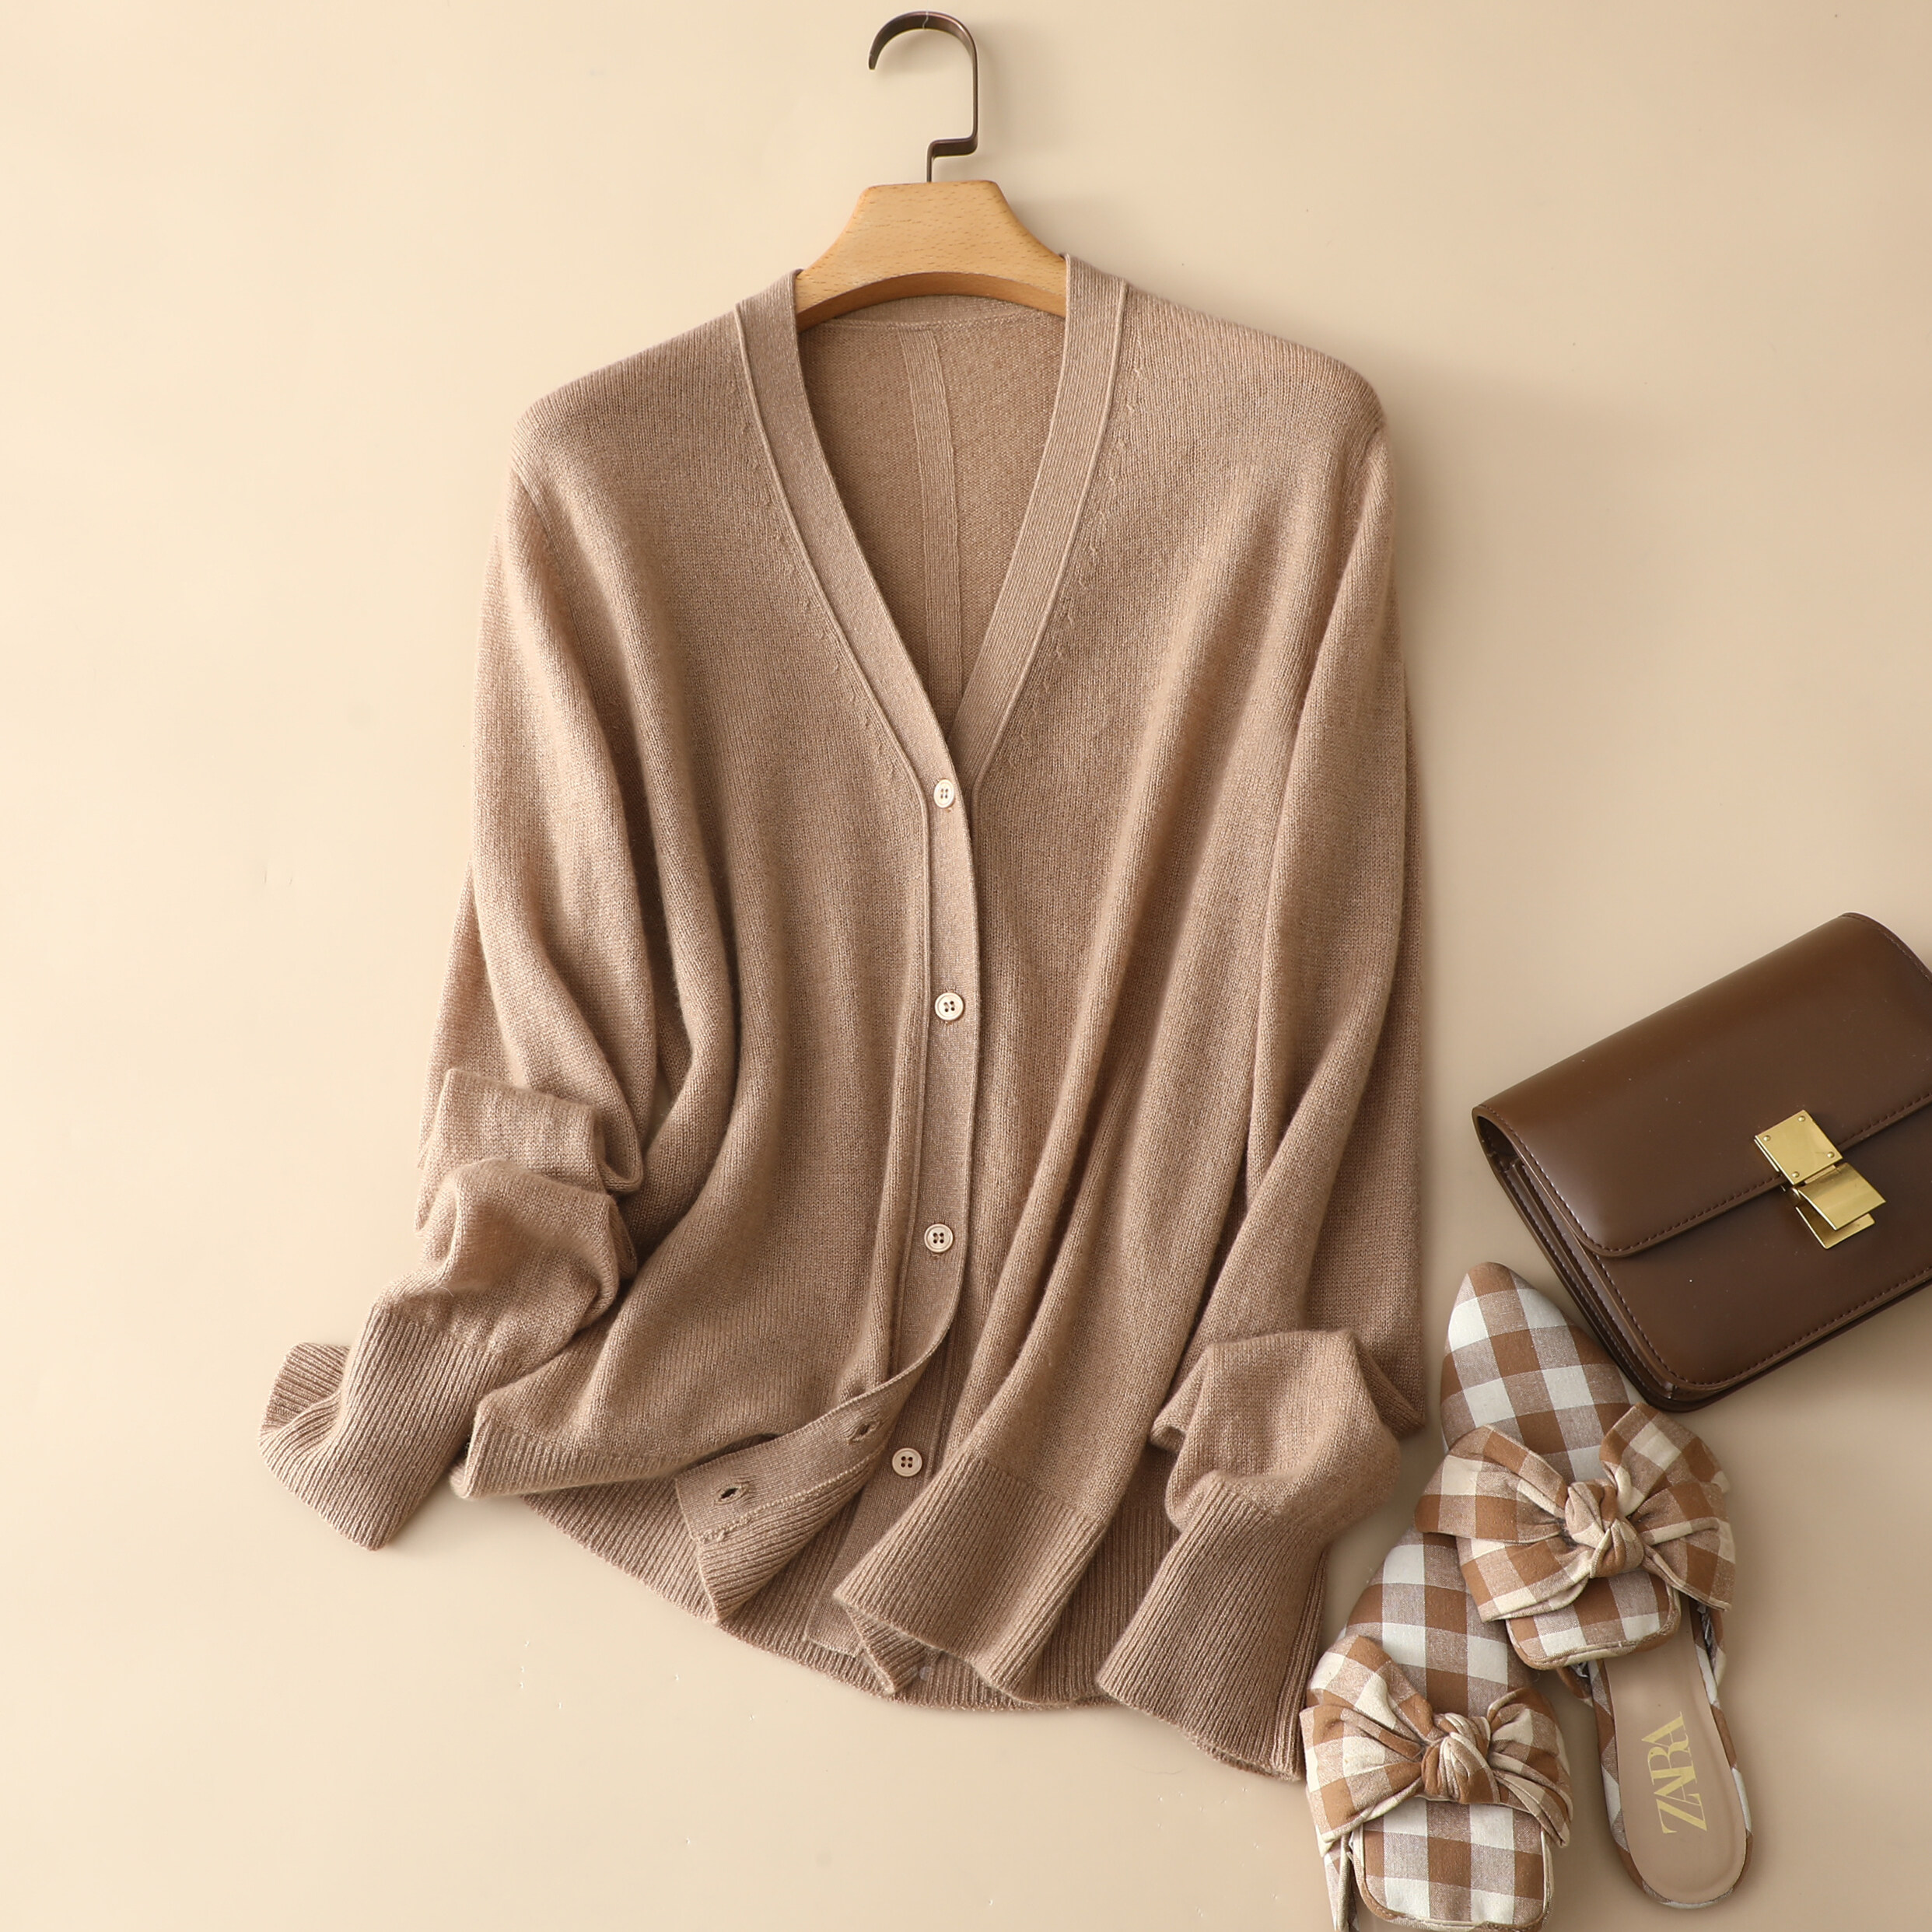 Monochrome Basic Knit Cashmere, Long Sleeve Cashmere, Women Button Cardigan, Cashmere Sweater